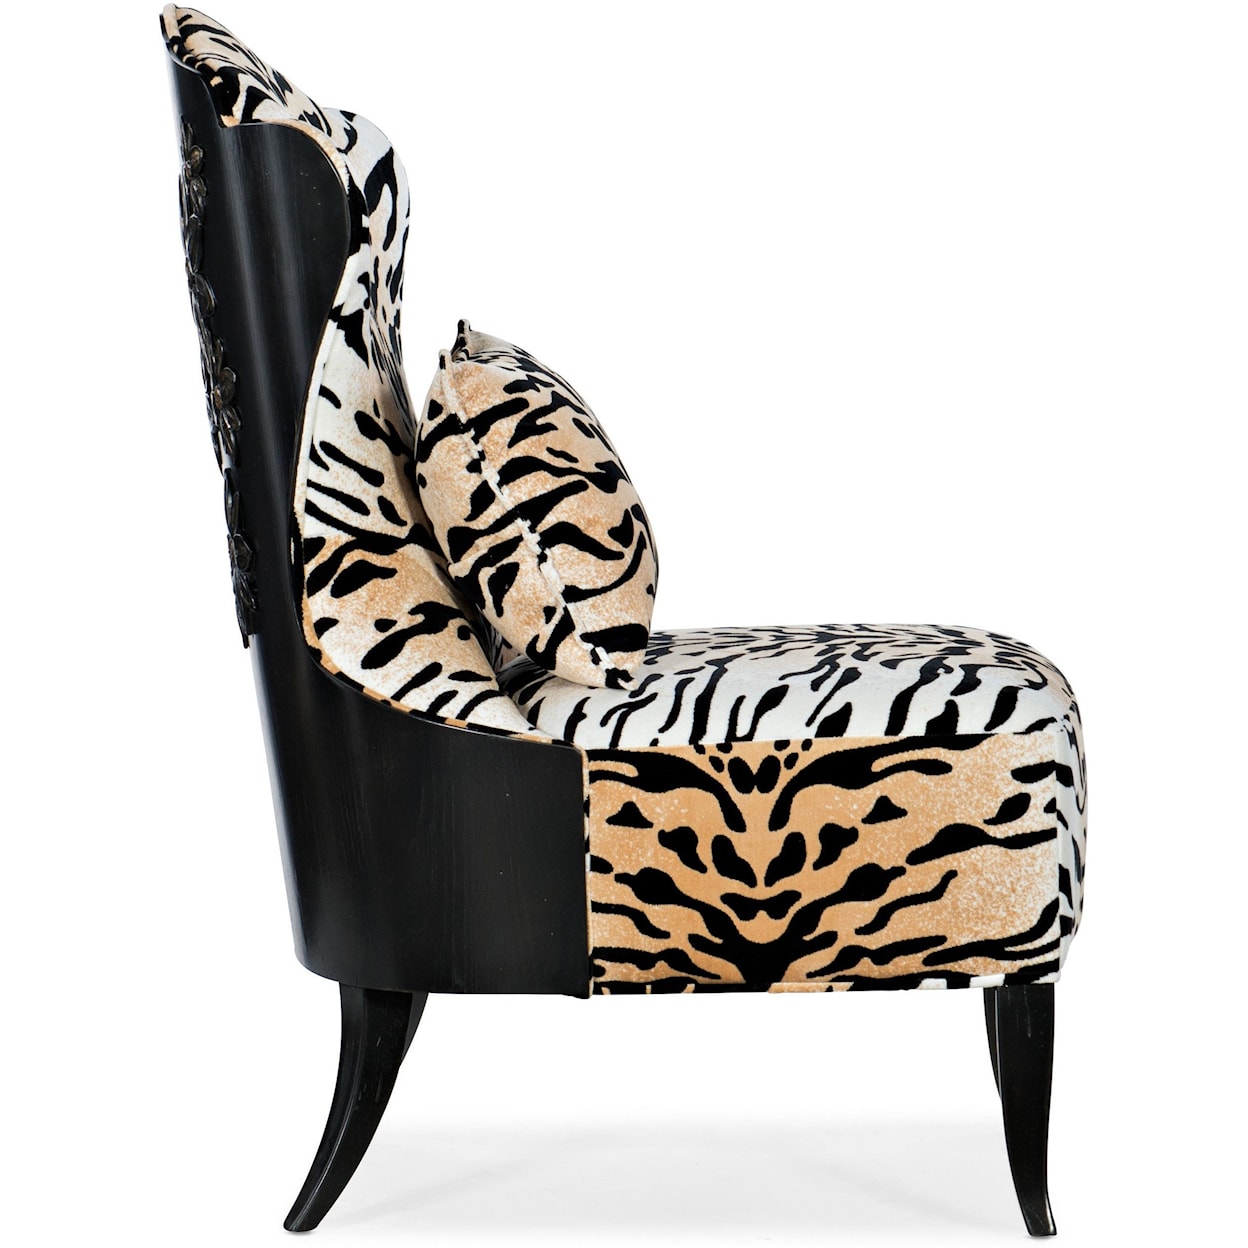 Hooker Furniture Sanctuary Slipper Chair